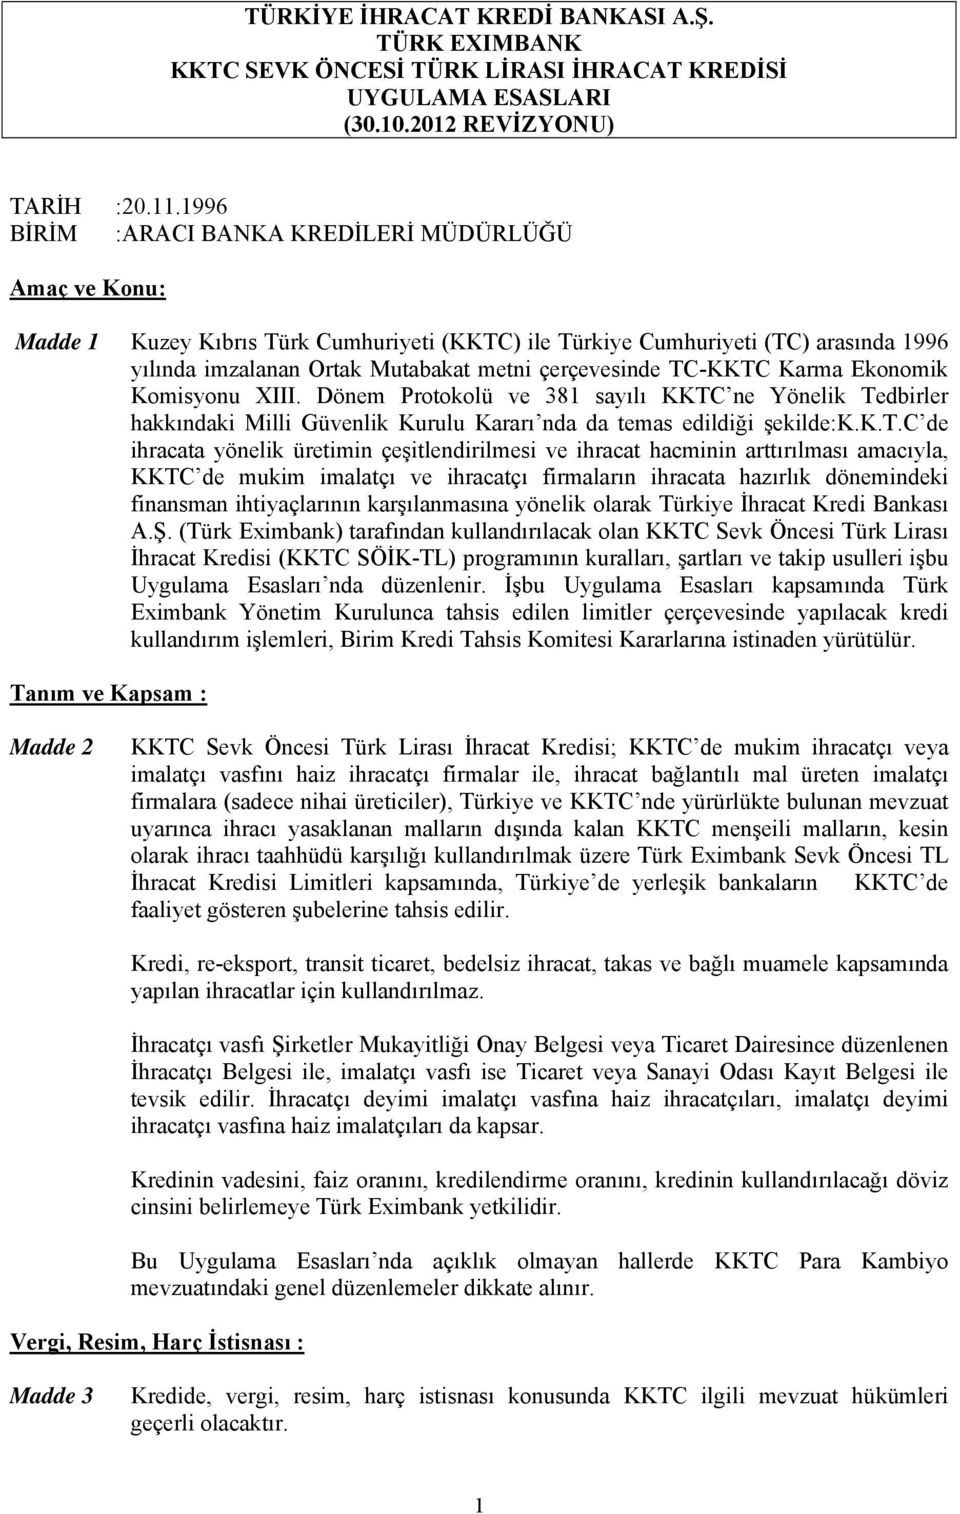 TC-KKTC Karma Ekonomik Komisyonu XIII. Dönem Proto